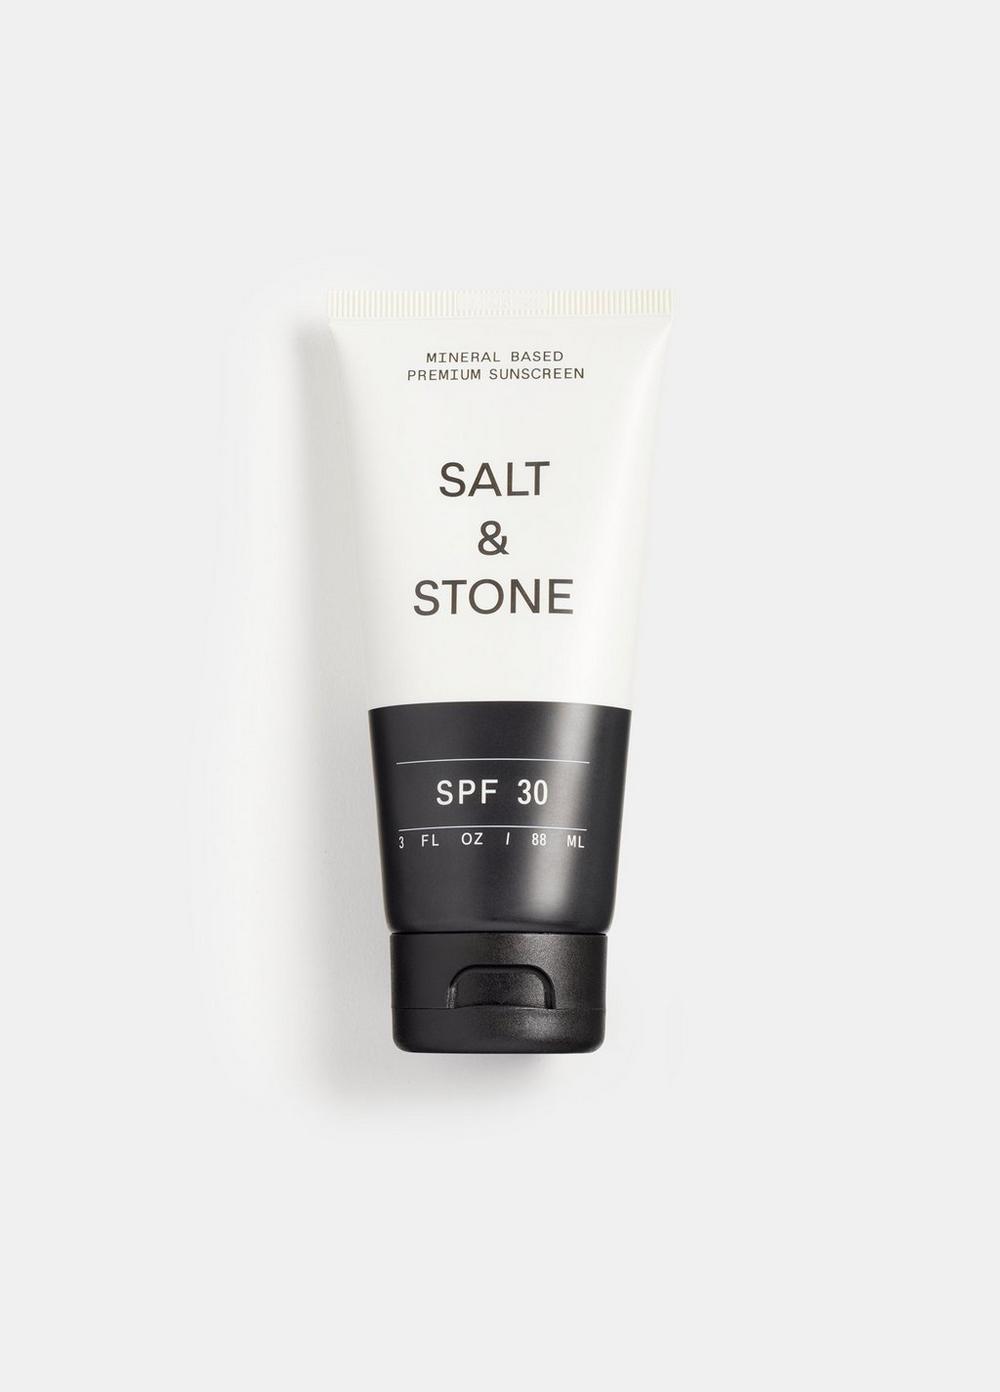 SALT & STONE / SPF 30 Sunscreen Lotion